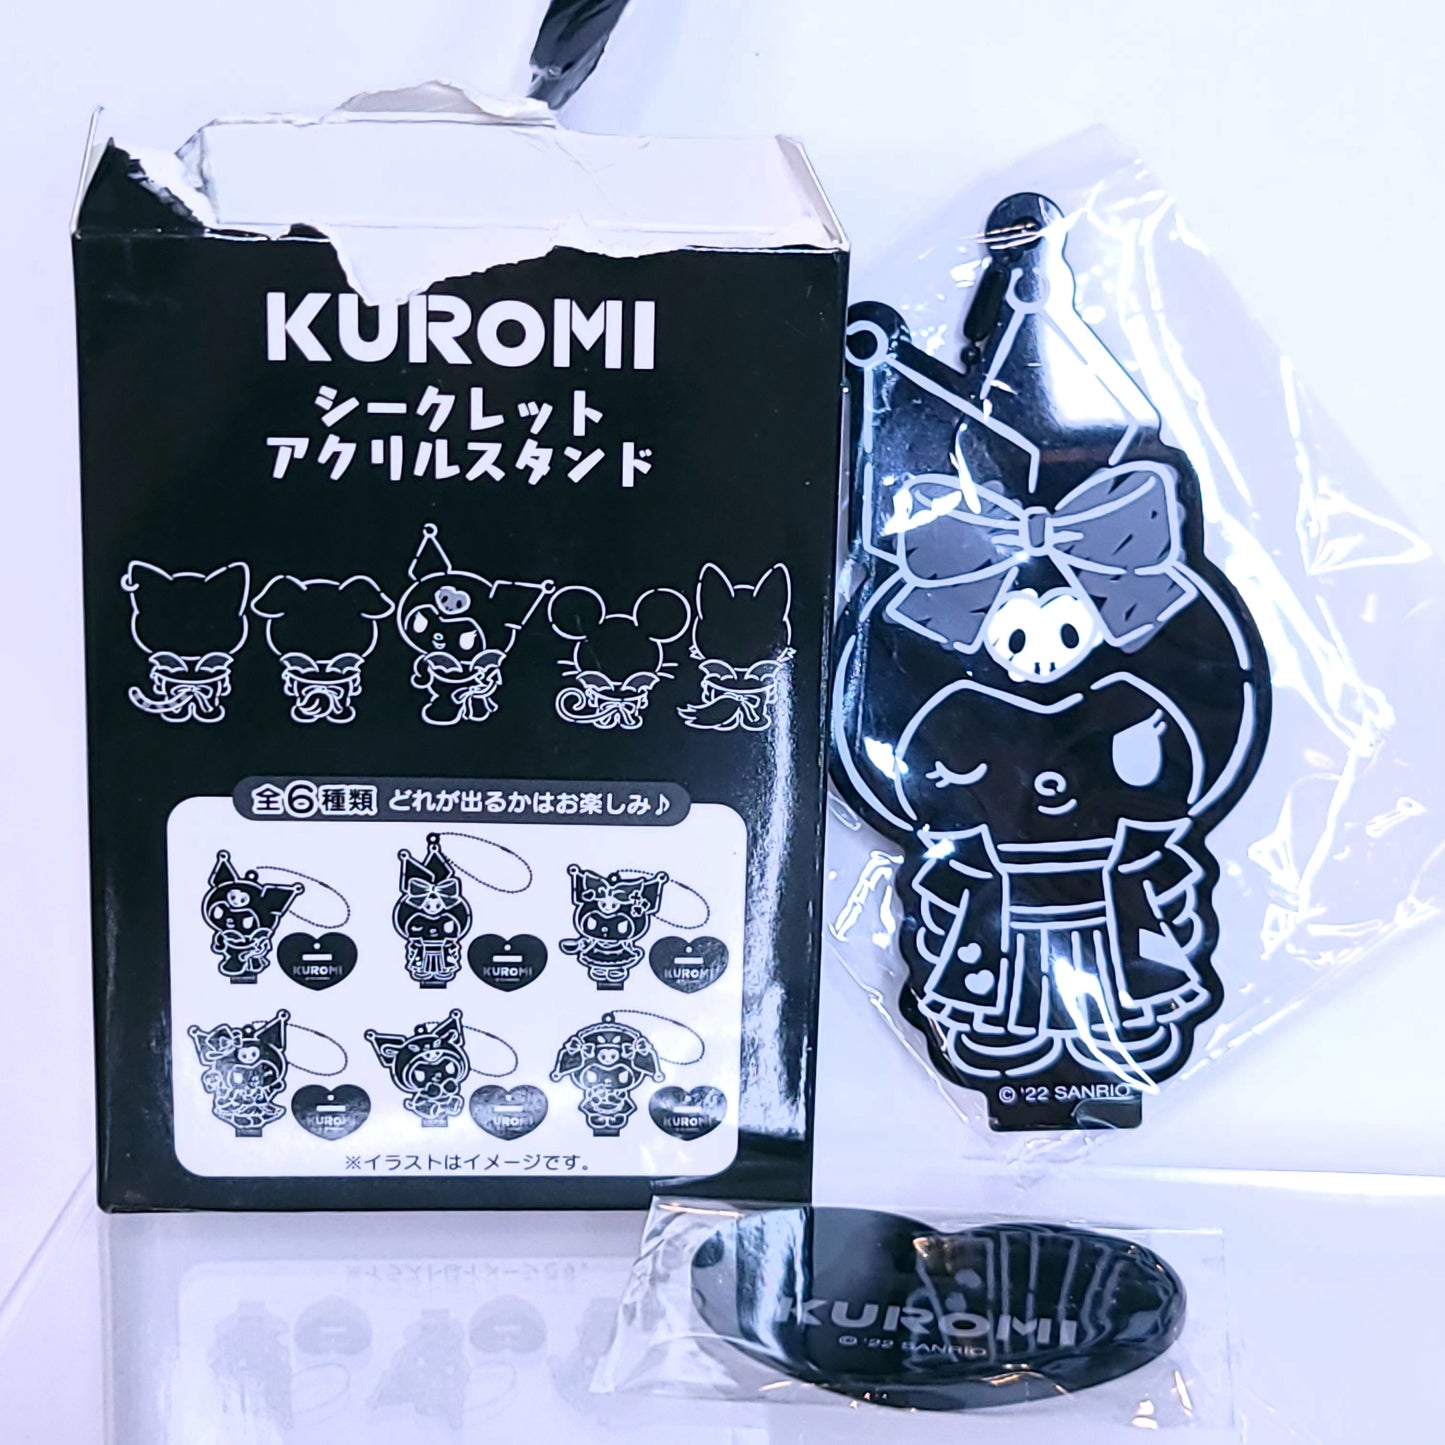 Black Kuromi Keychain Acrylic Stand